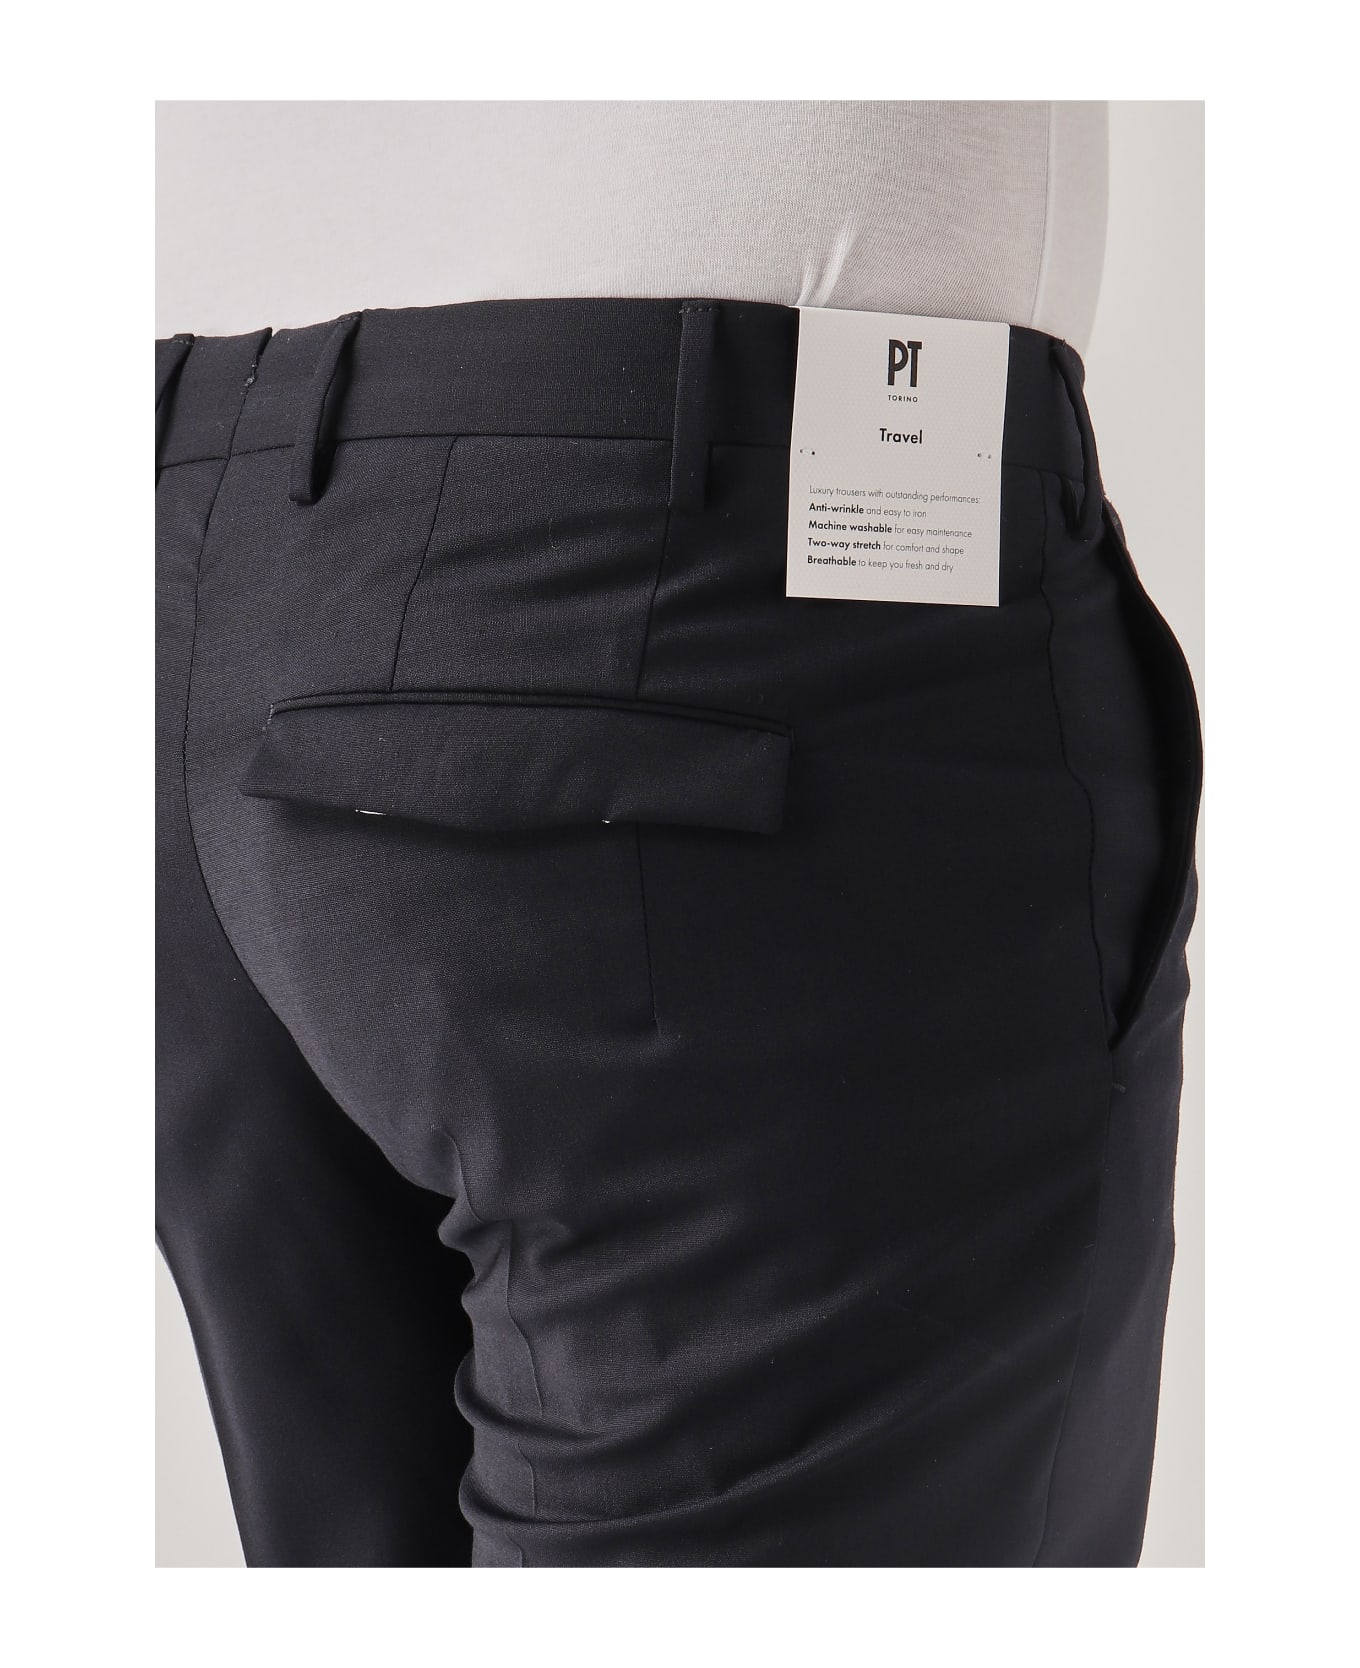 PT Torino Pantalone Uomo Trousers - NAVY